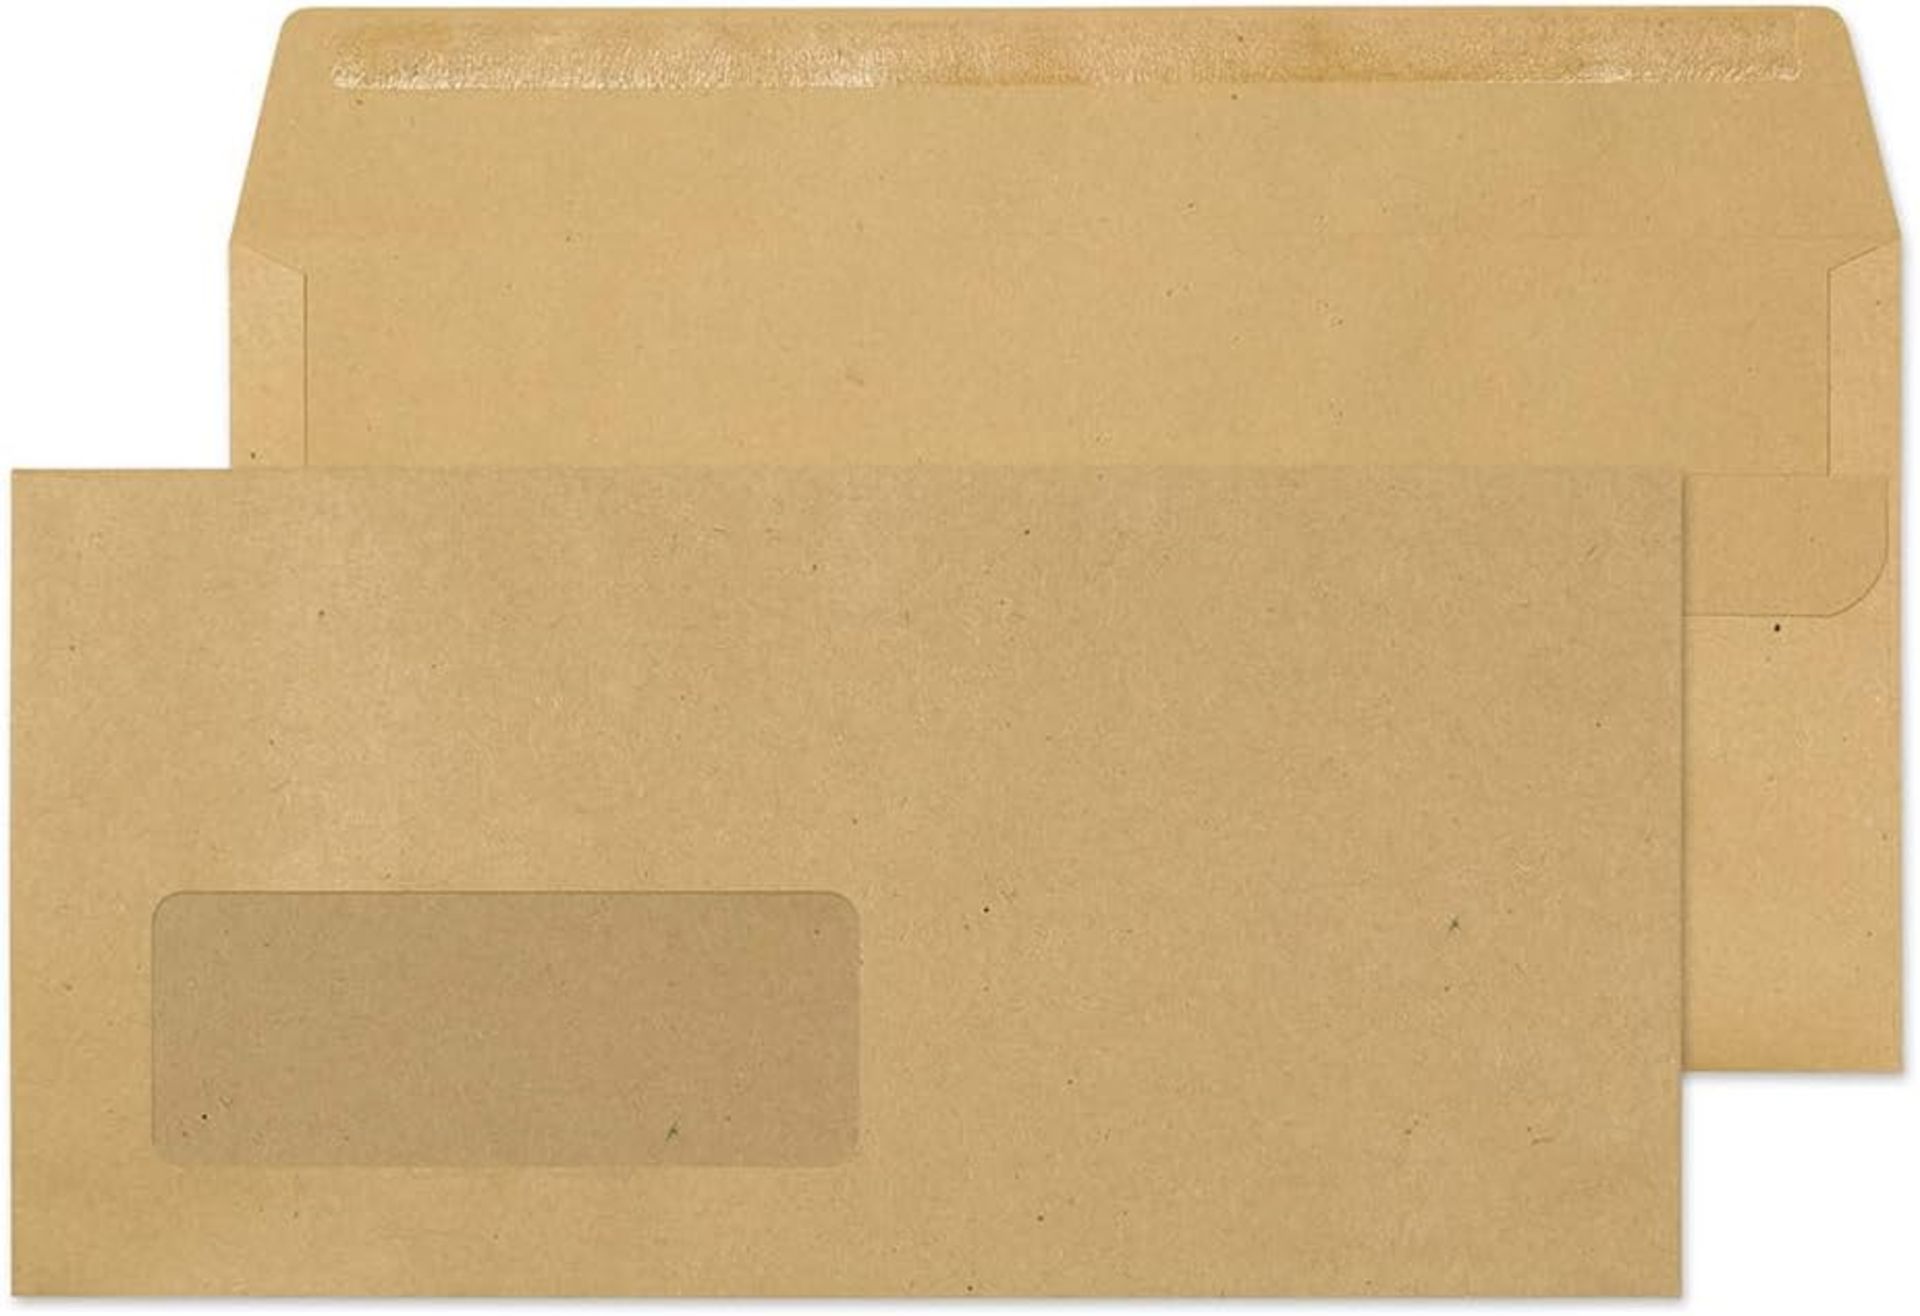 3 x Packs Of 1000 Blake Purely Everyday Window Manila Envelopes RRP £55 Per Pack